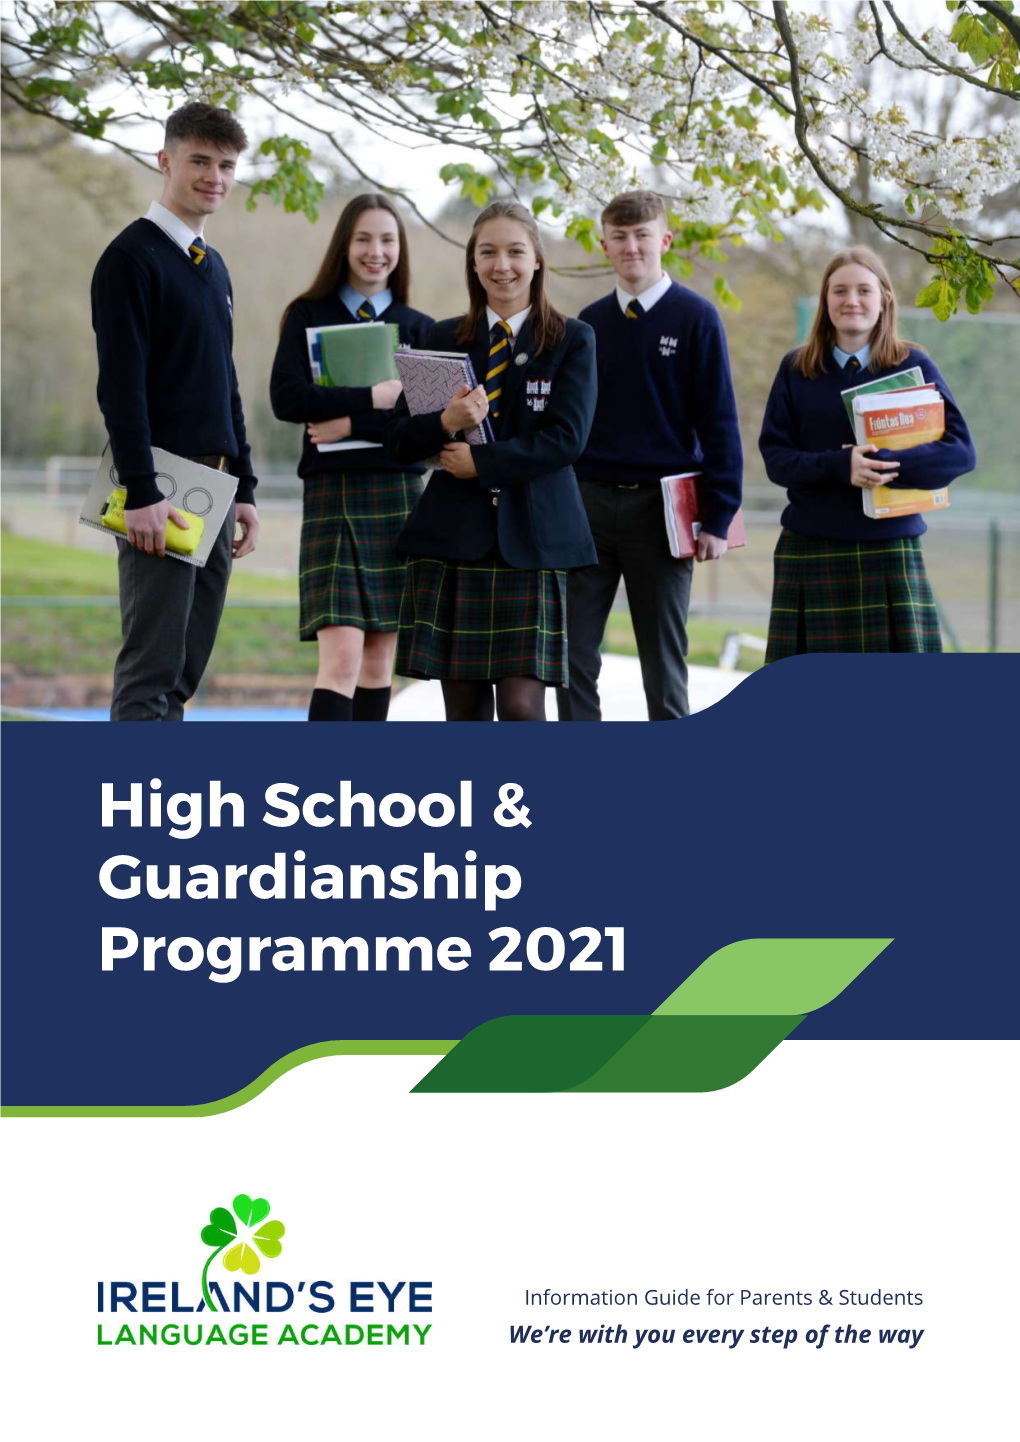 High School & Guardianship Programme 2021